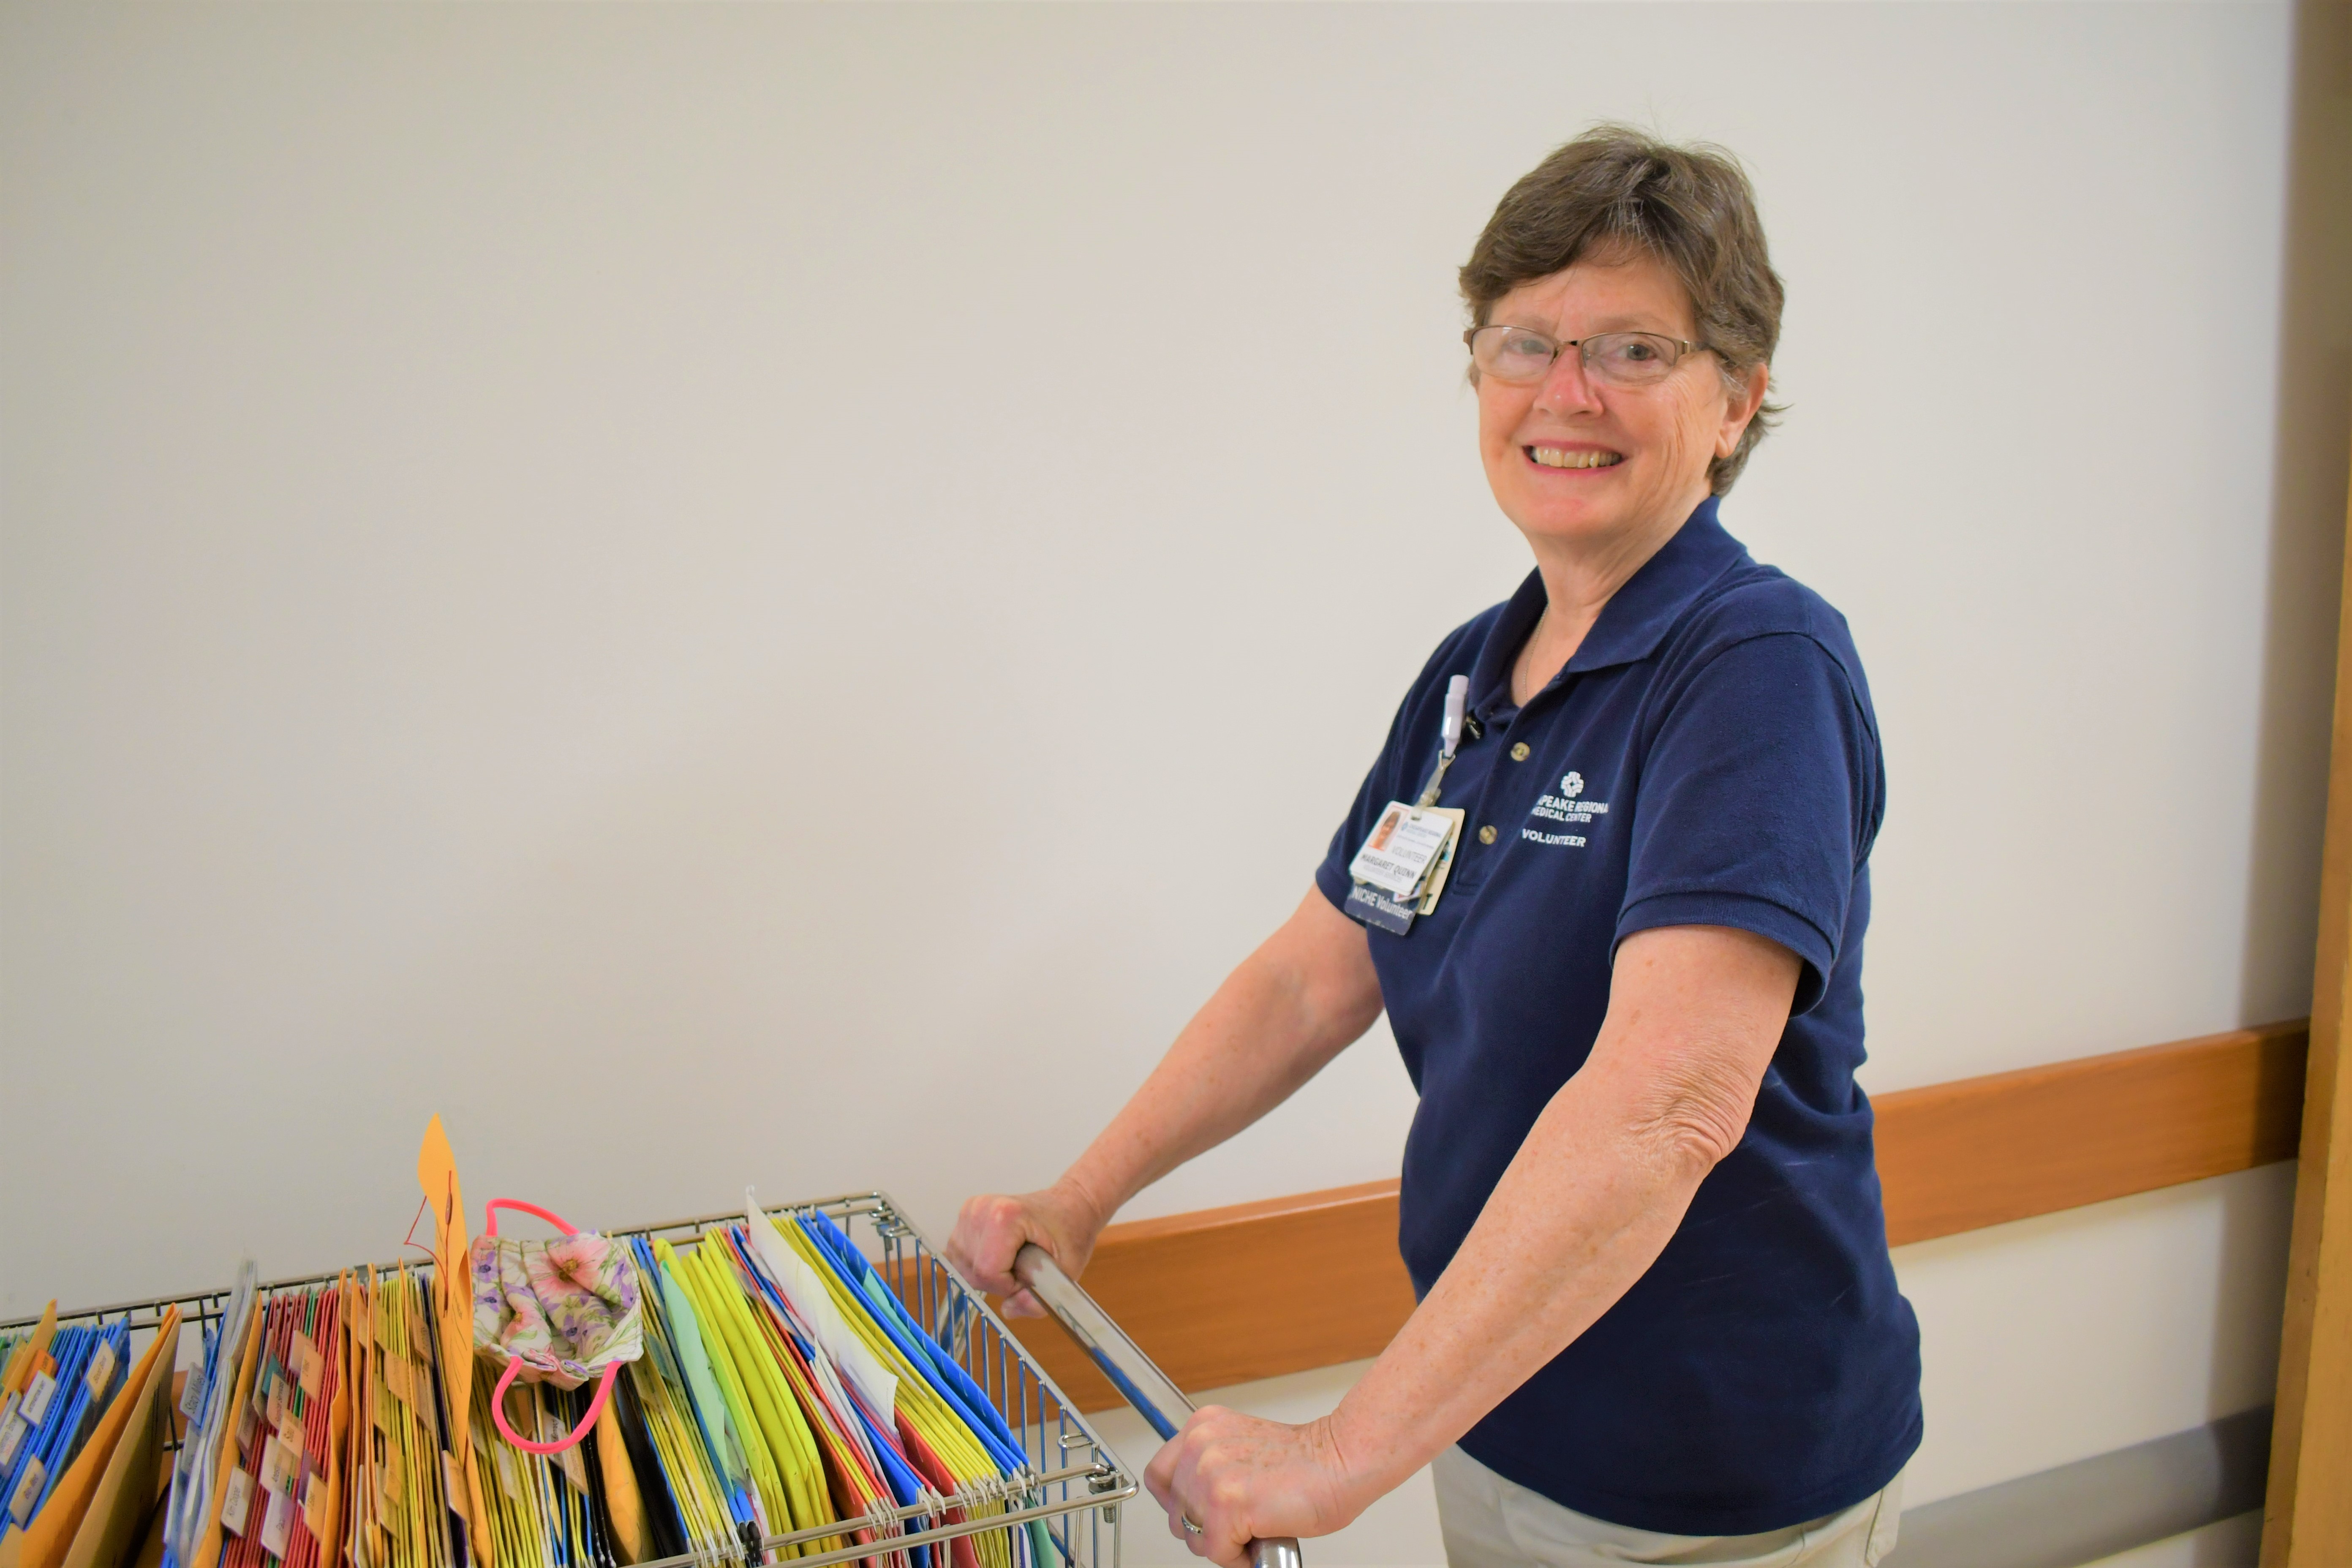 Volunteer making deliveries throughout hospital